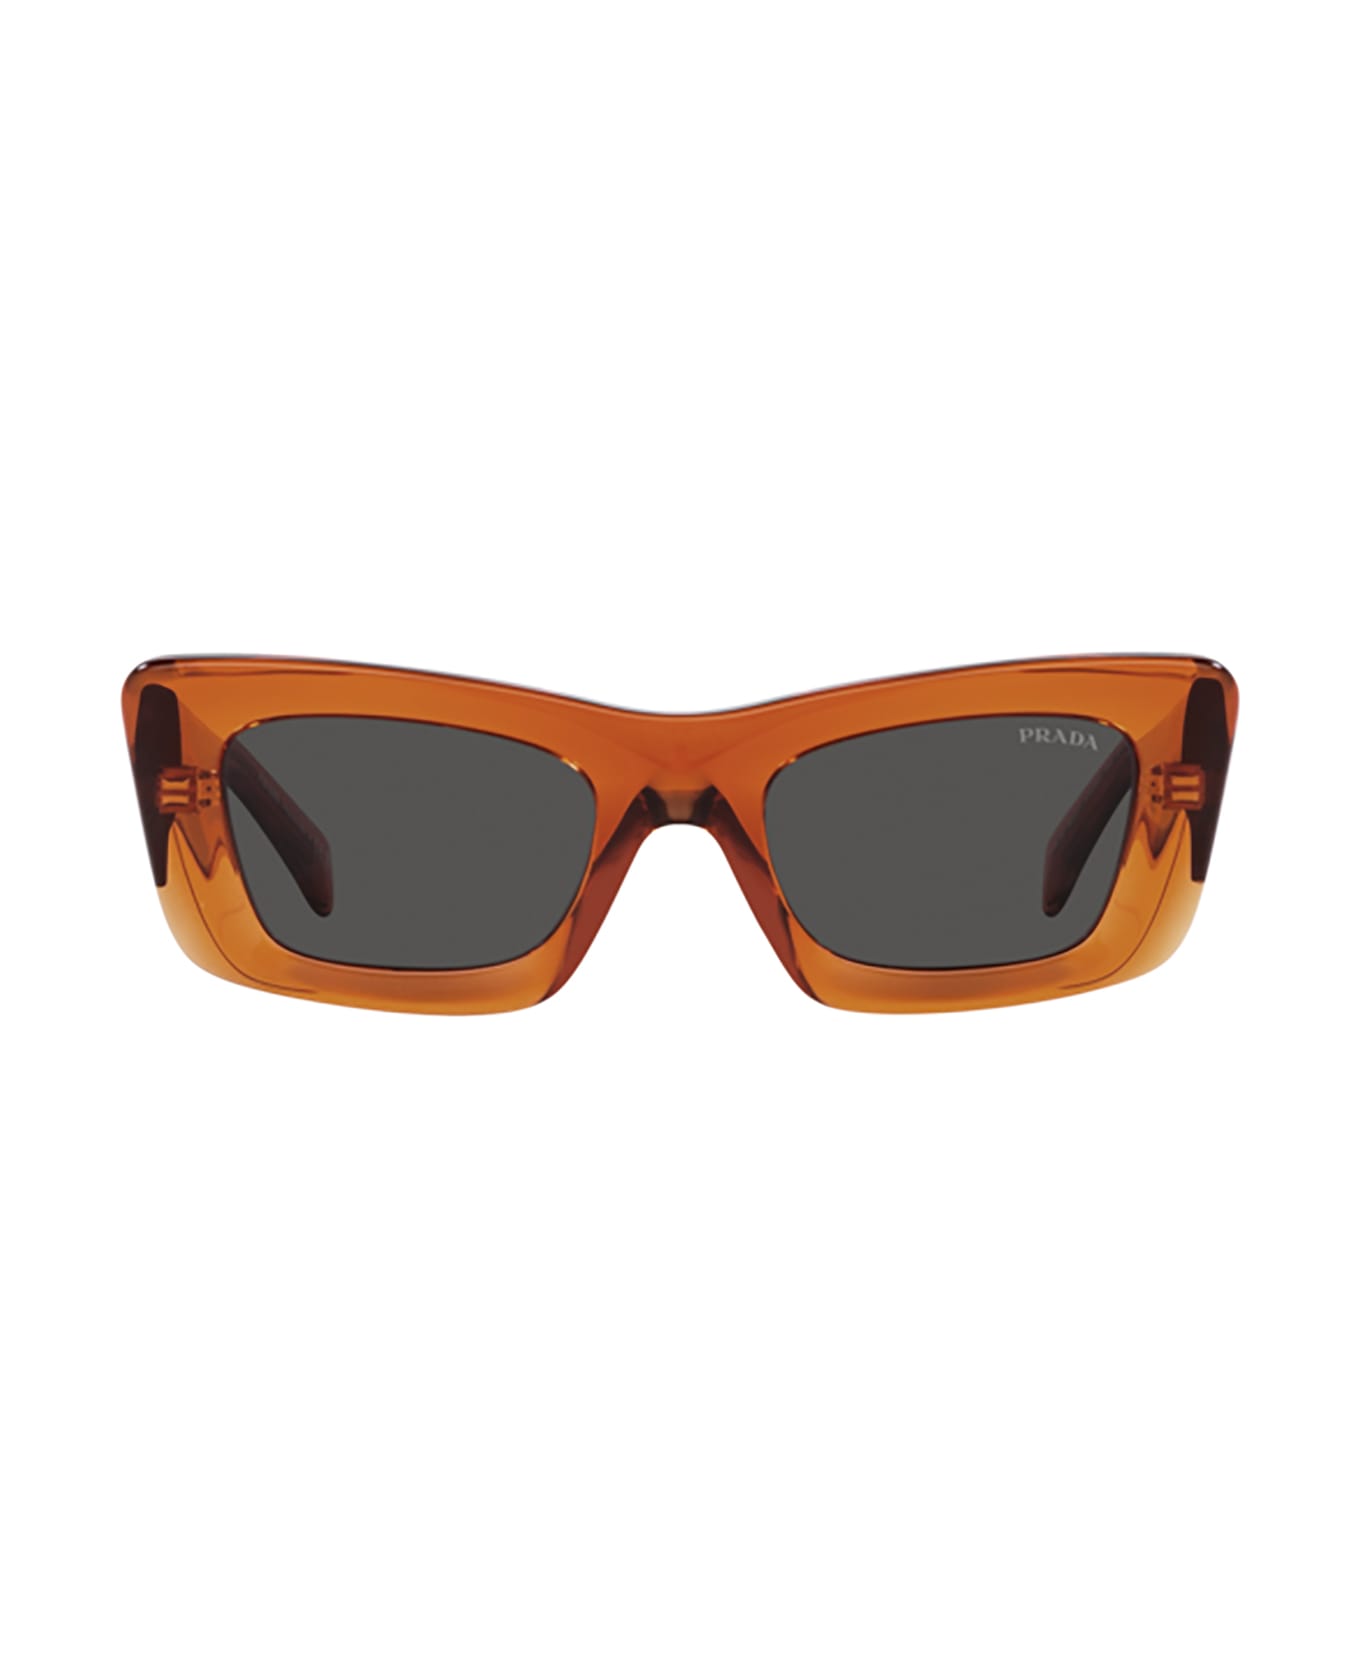 Prada Eyewear Pr 13zs Crystal Orange Sunglasses - Crystal Orange